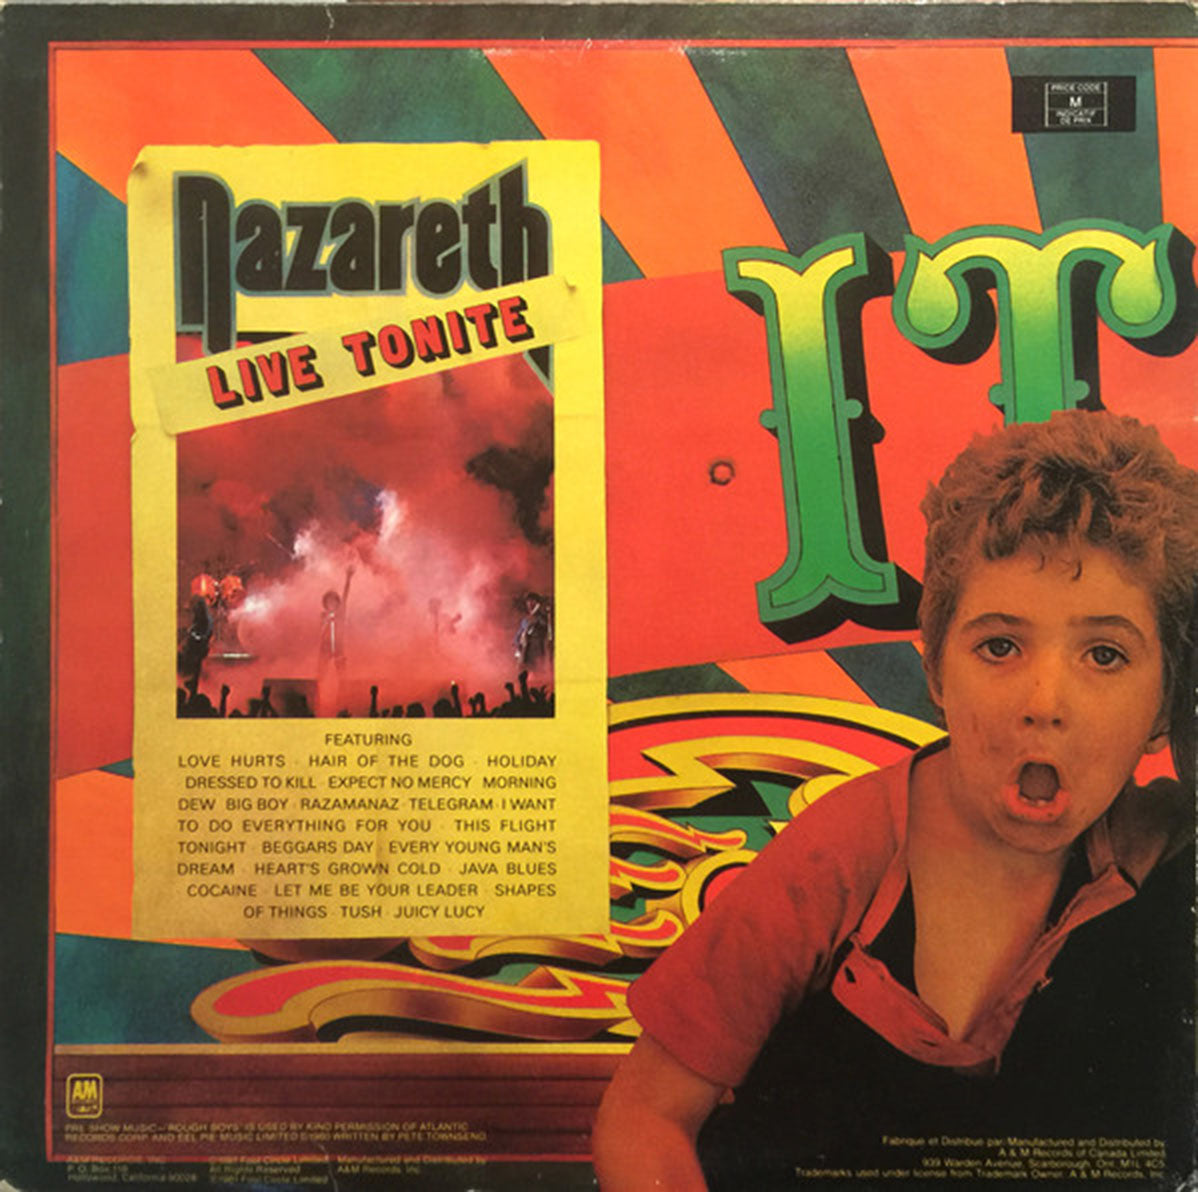 Nazareth – 'Snaz - 1981